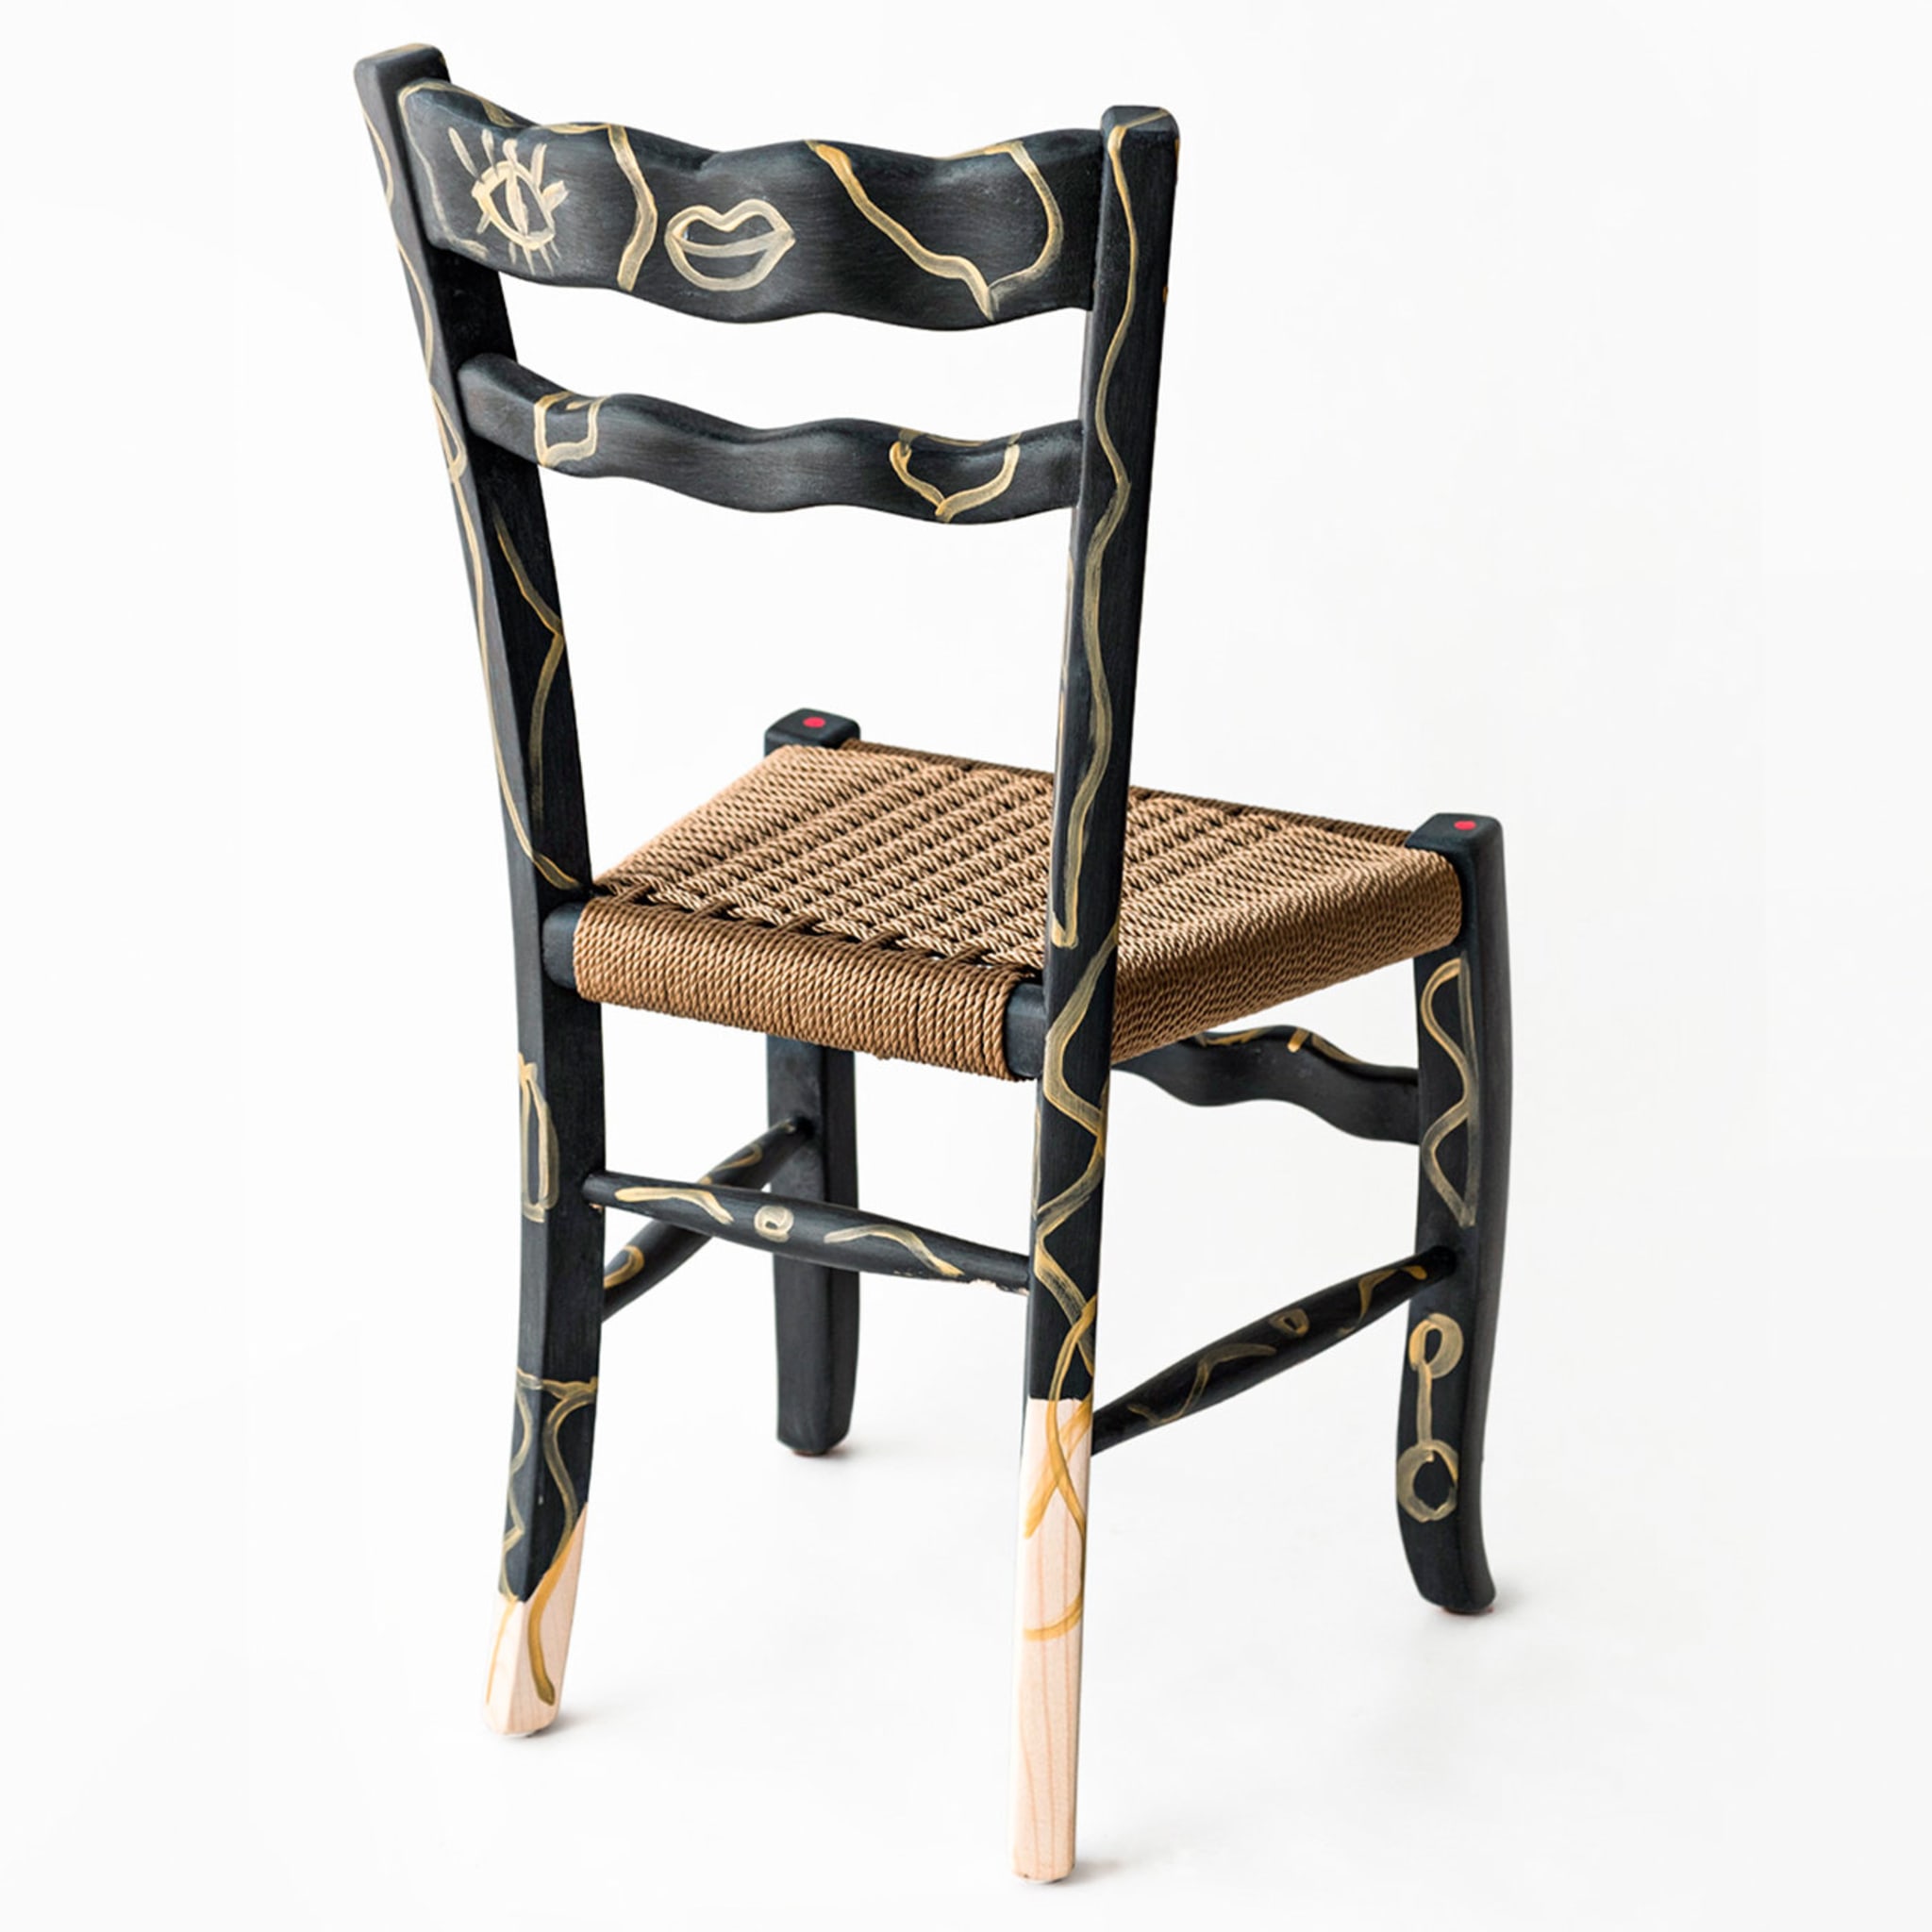 A Signurina Pupara Chair by Antonio Aricò - Alternative view 2